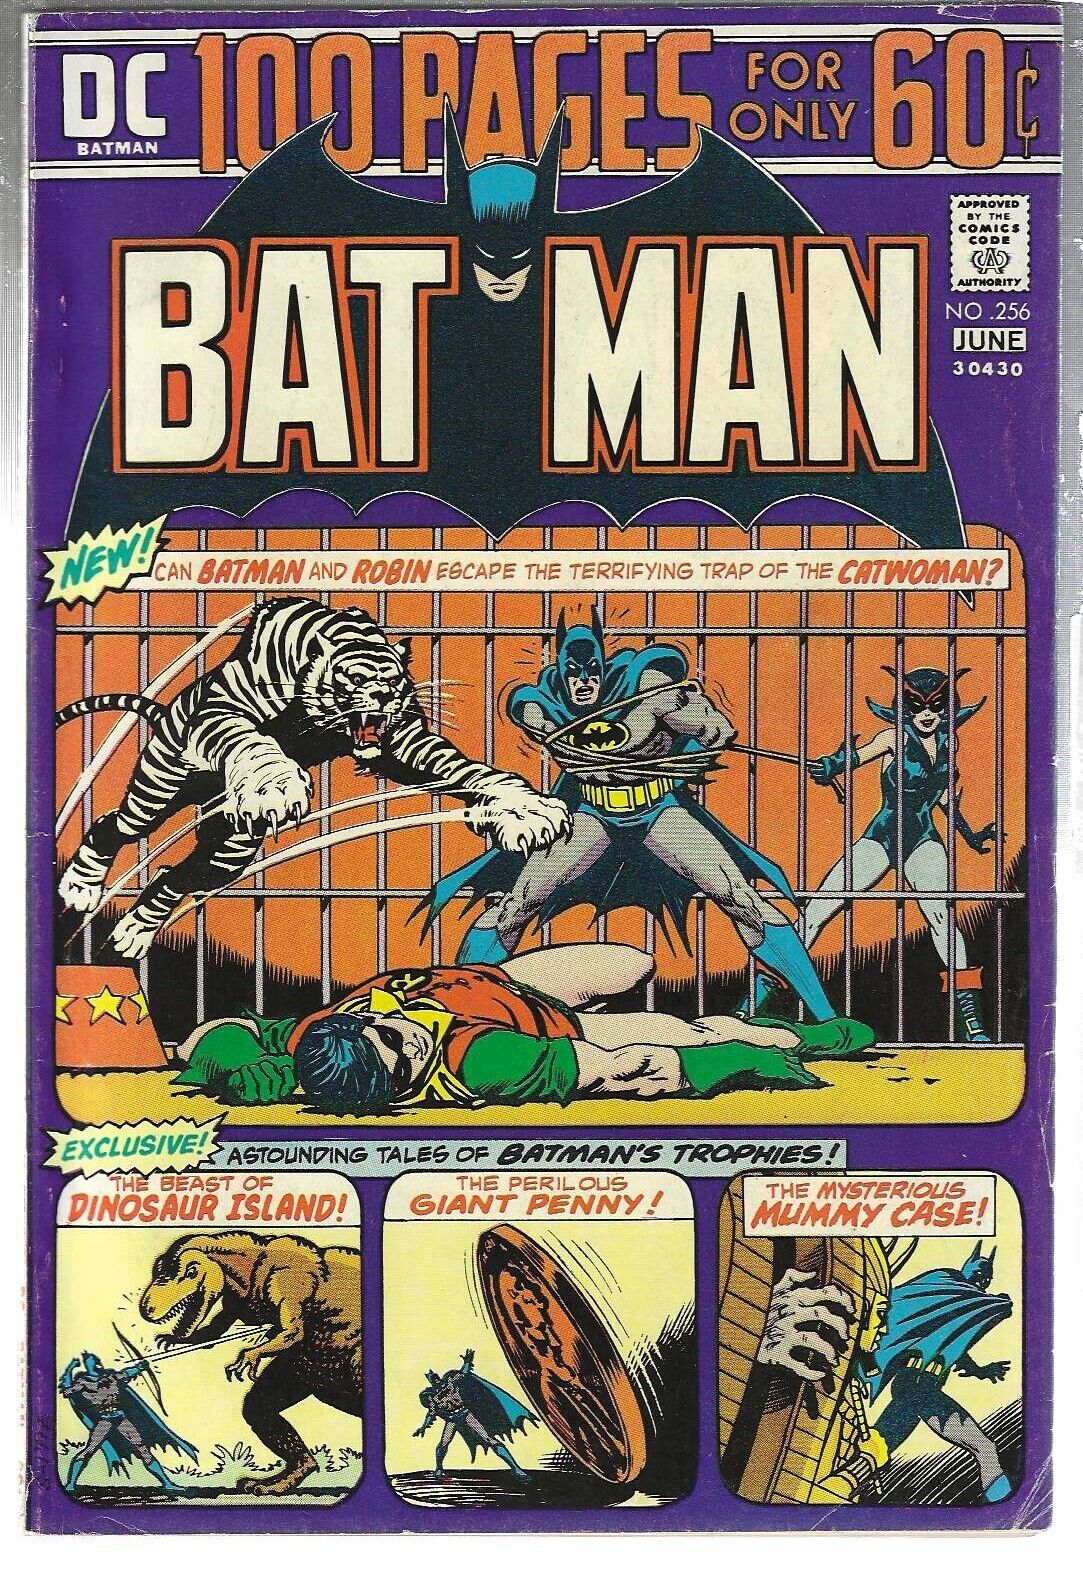 BATMAN #256 DC COMICS 1974 FN/VF 100 PAGES HTF CGC IT